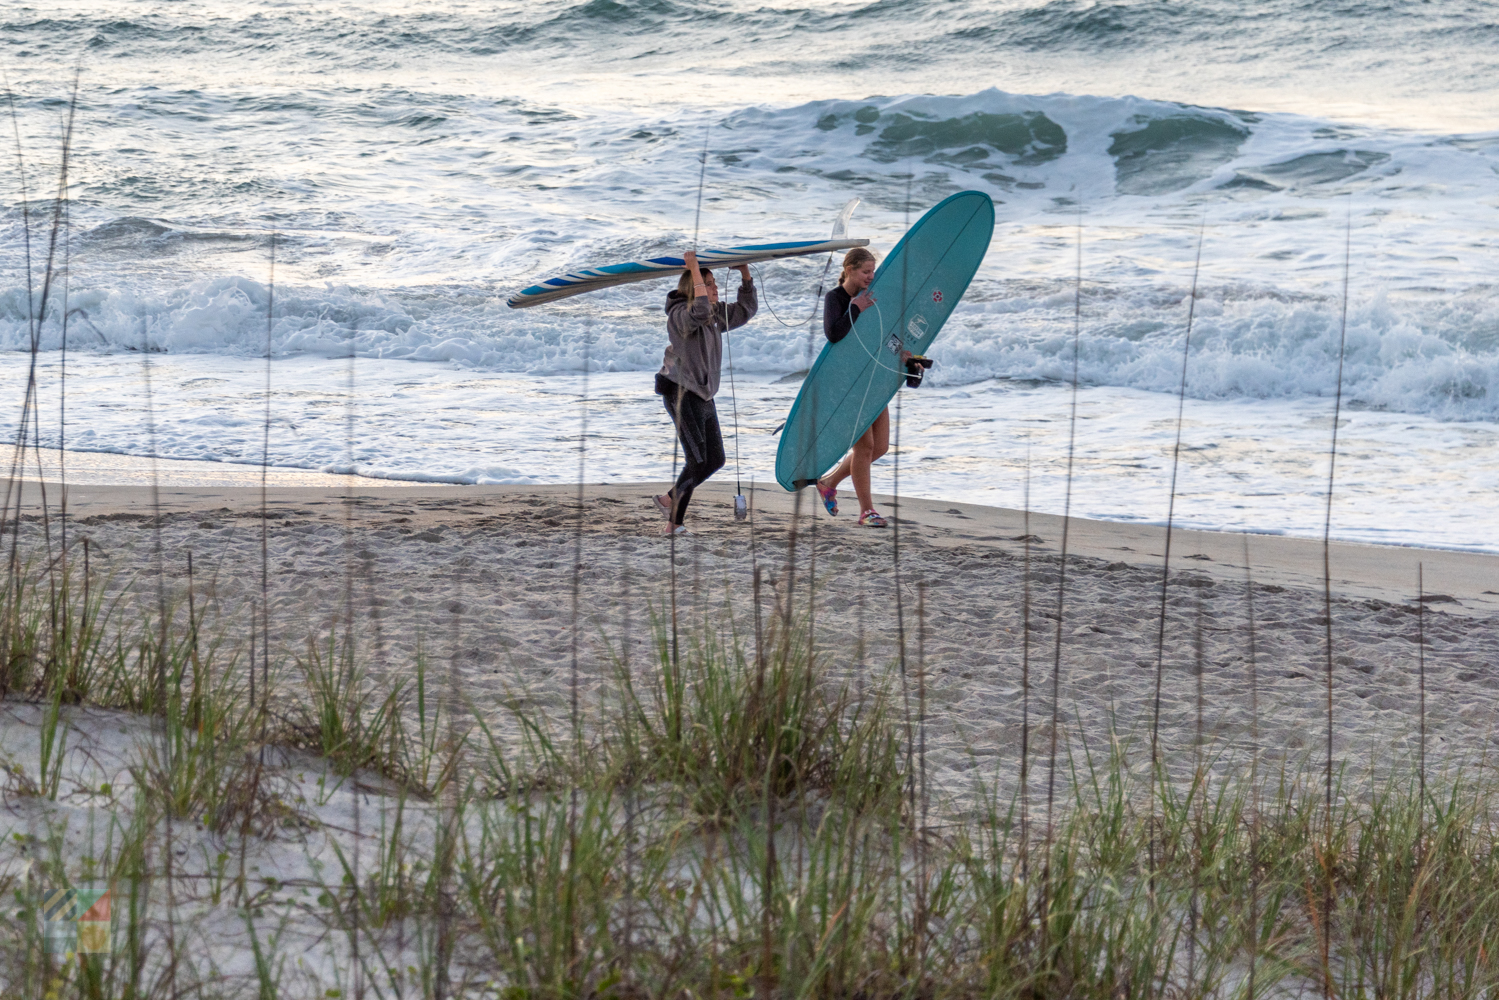 Surfers in Wrightsville Beach